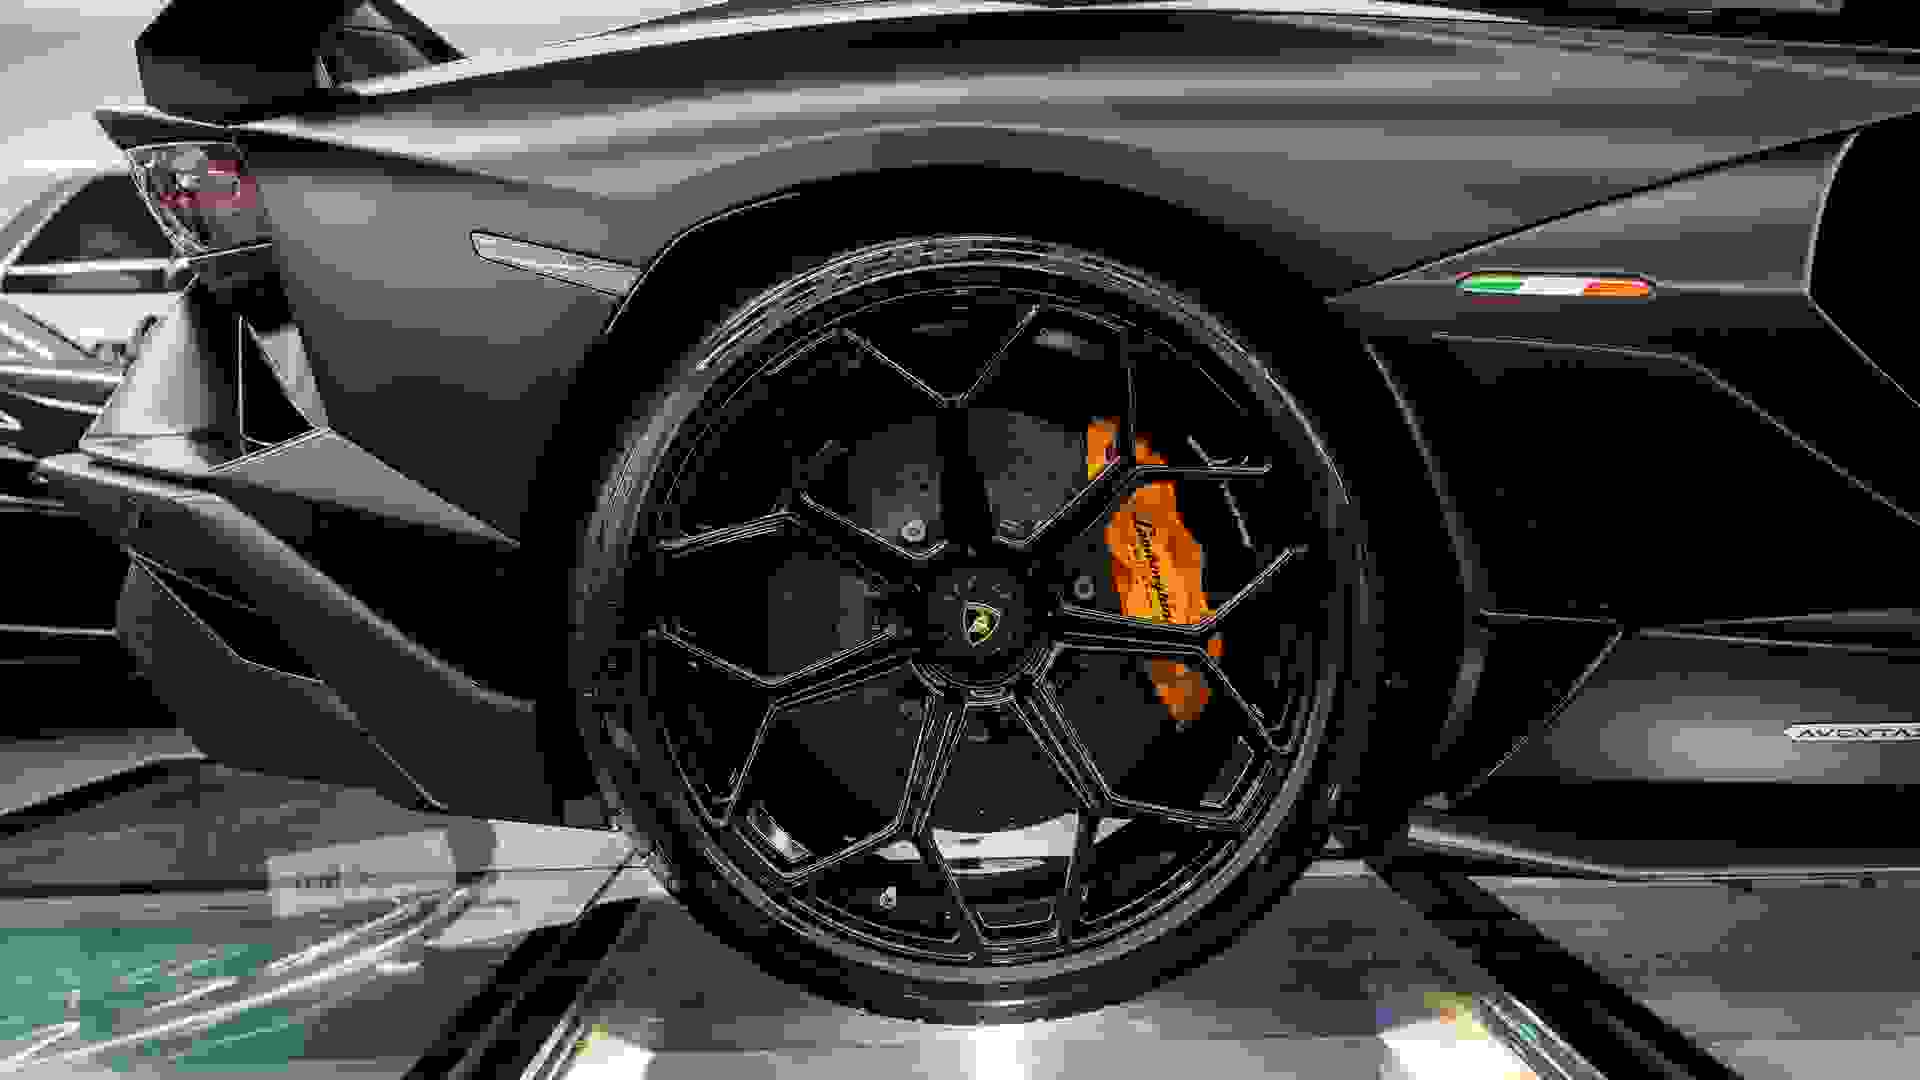 Lamborghini Aventador Photo b9b88ce5-c915-4325-a8f6-8d8e266528e0.jpg